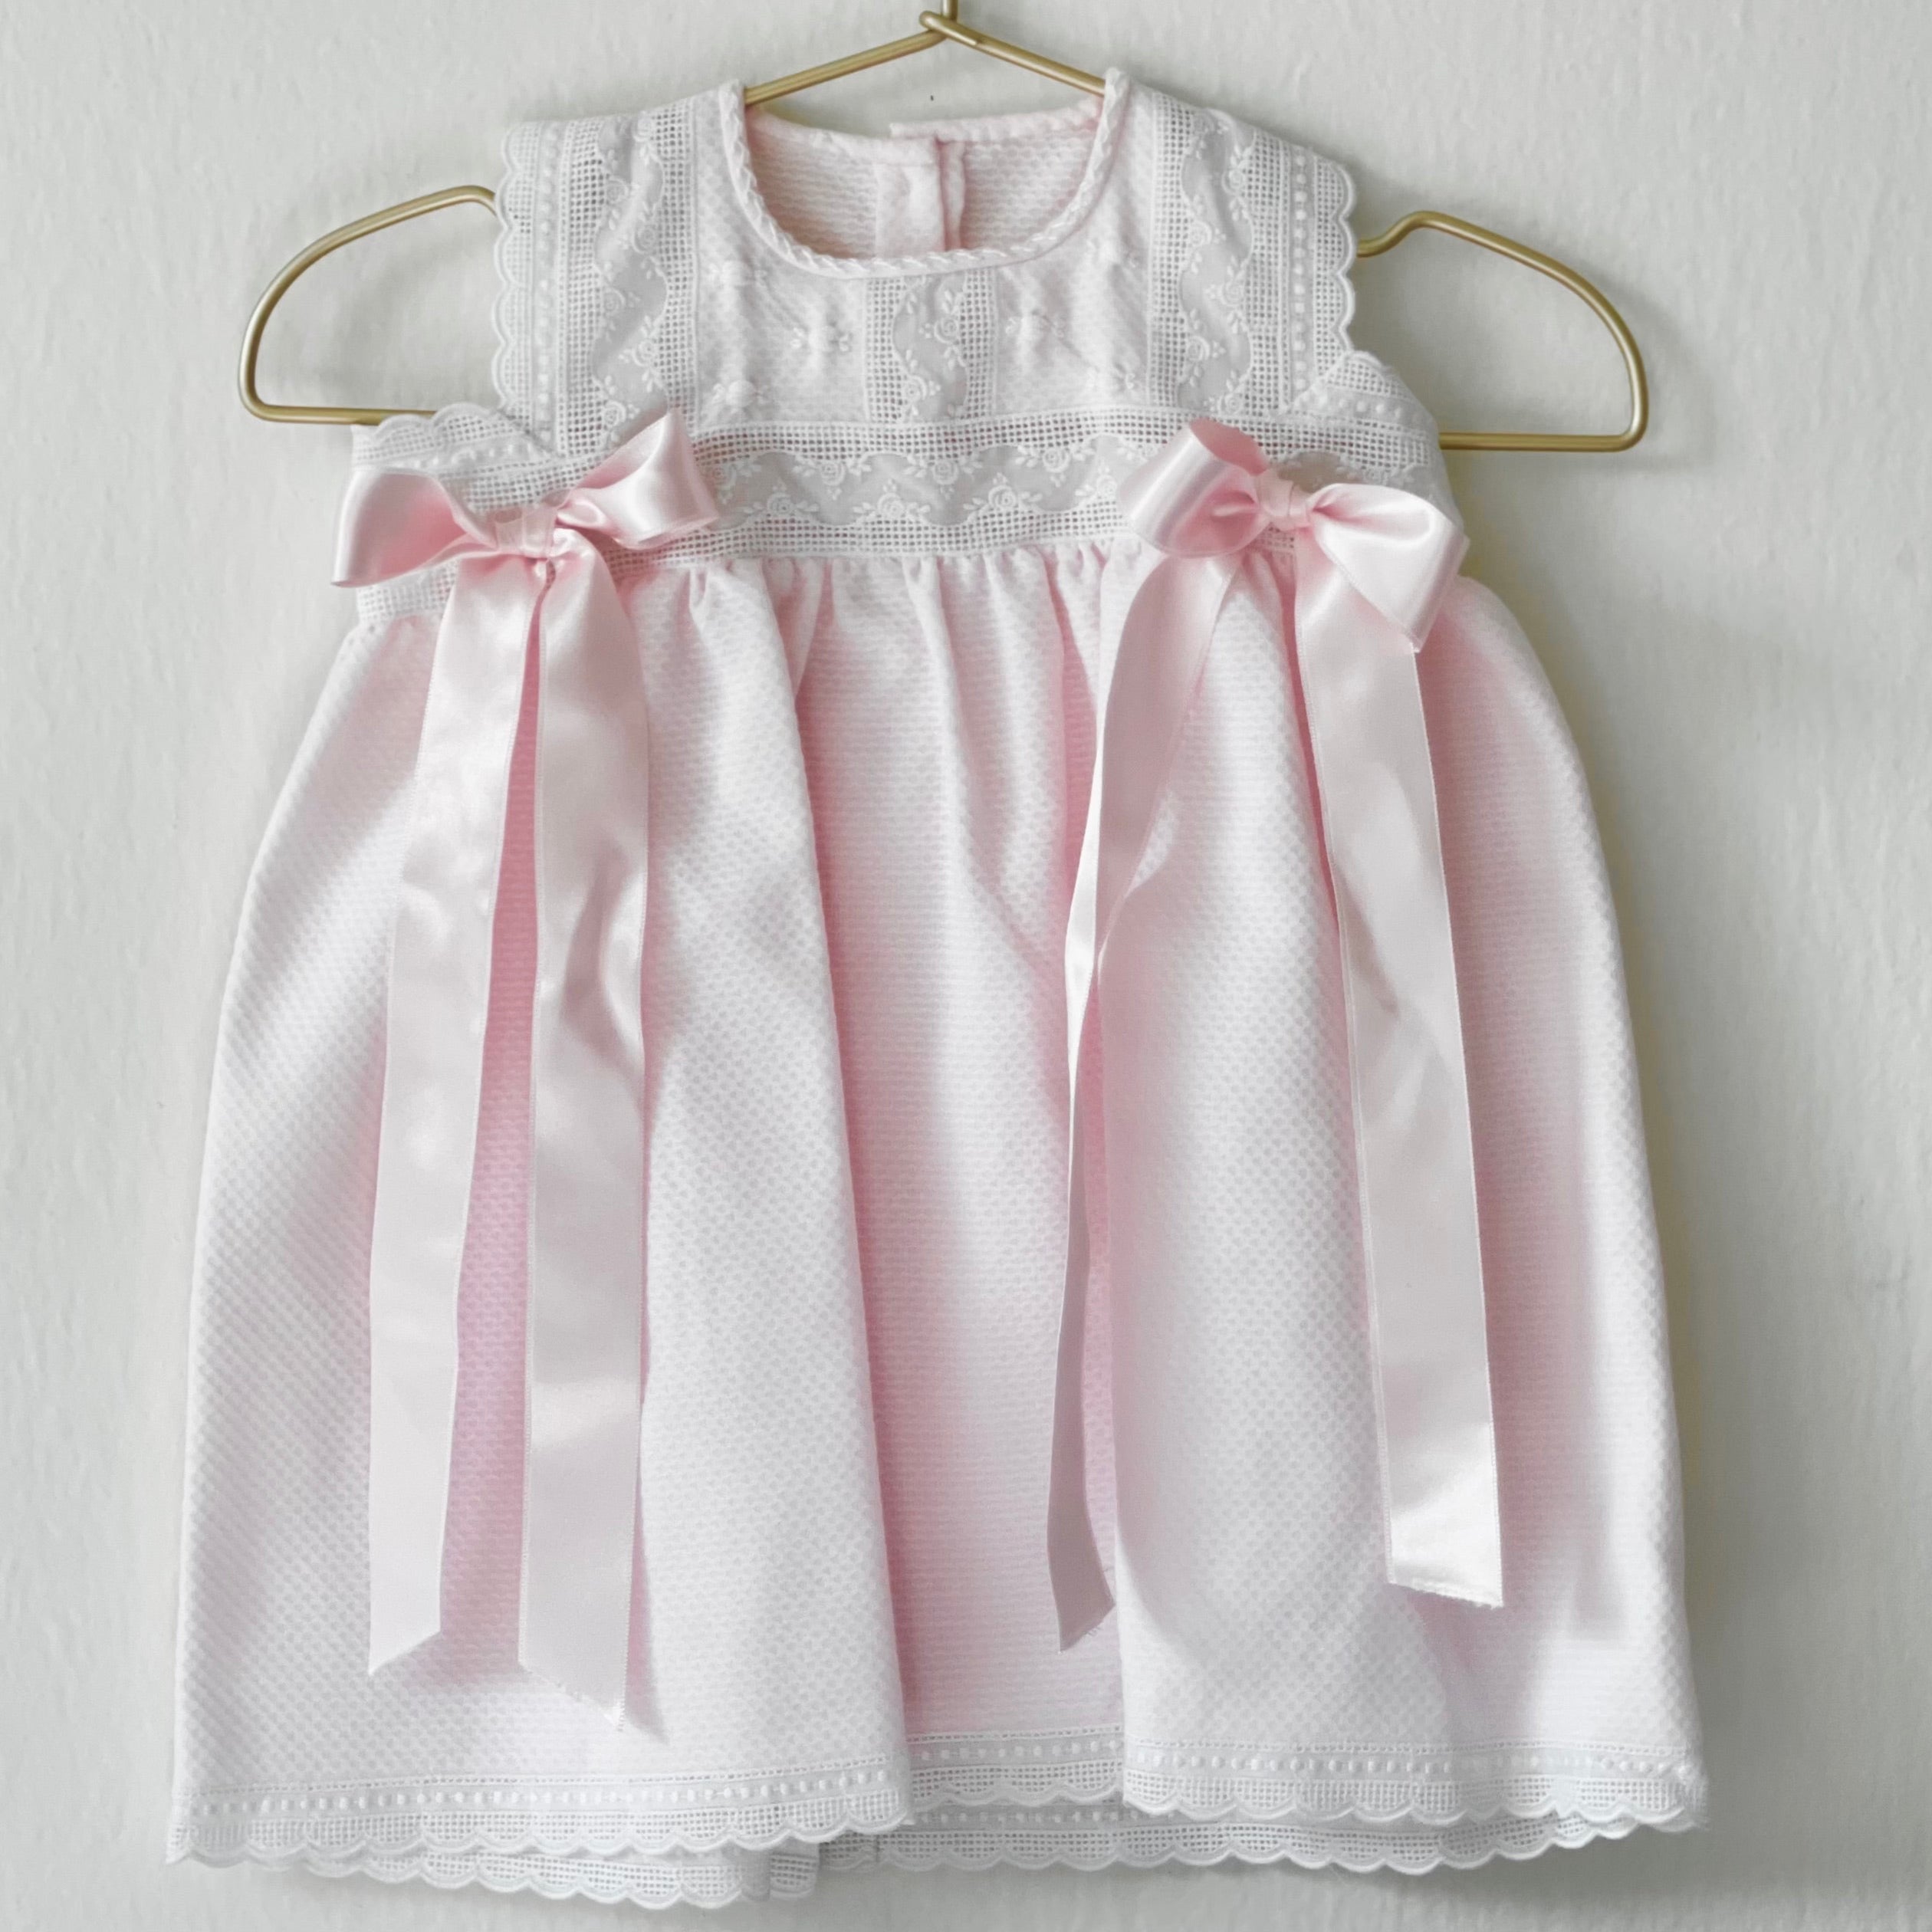 0-5 years Dress for Baby Girl| Alibaba.com